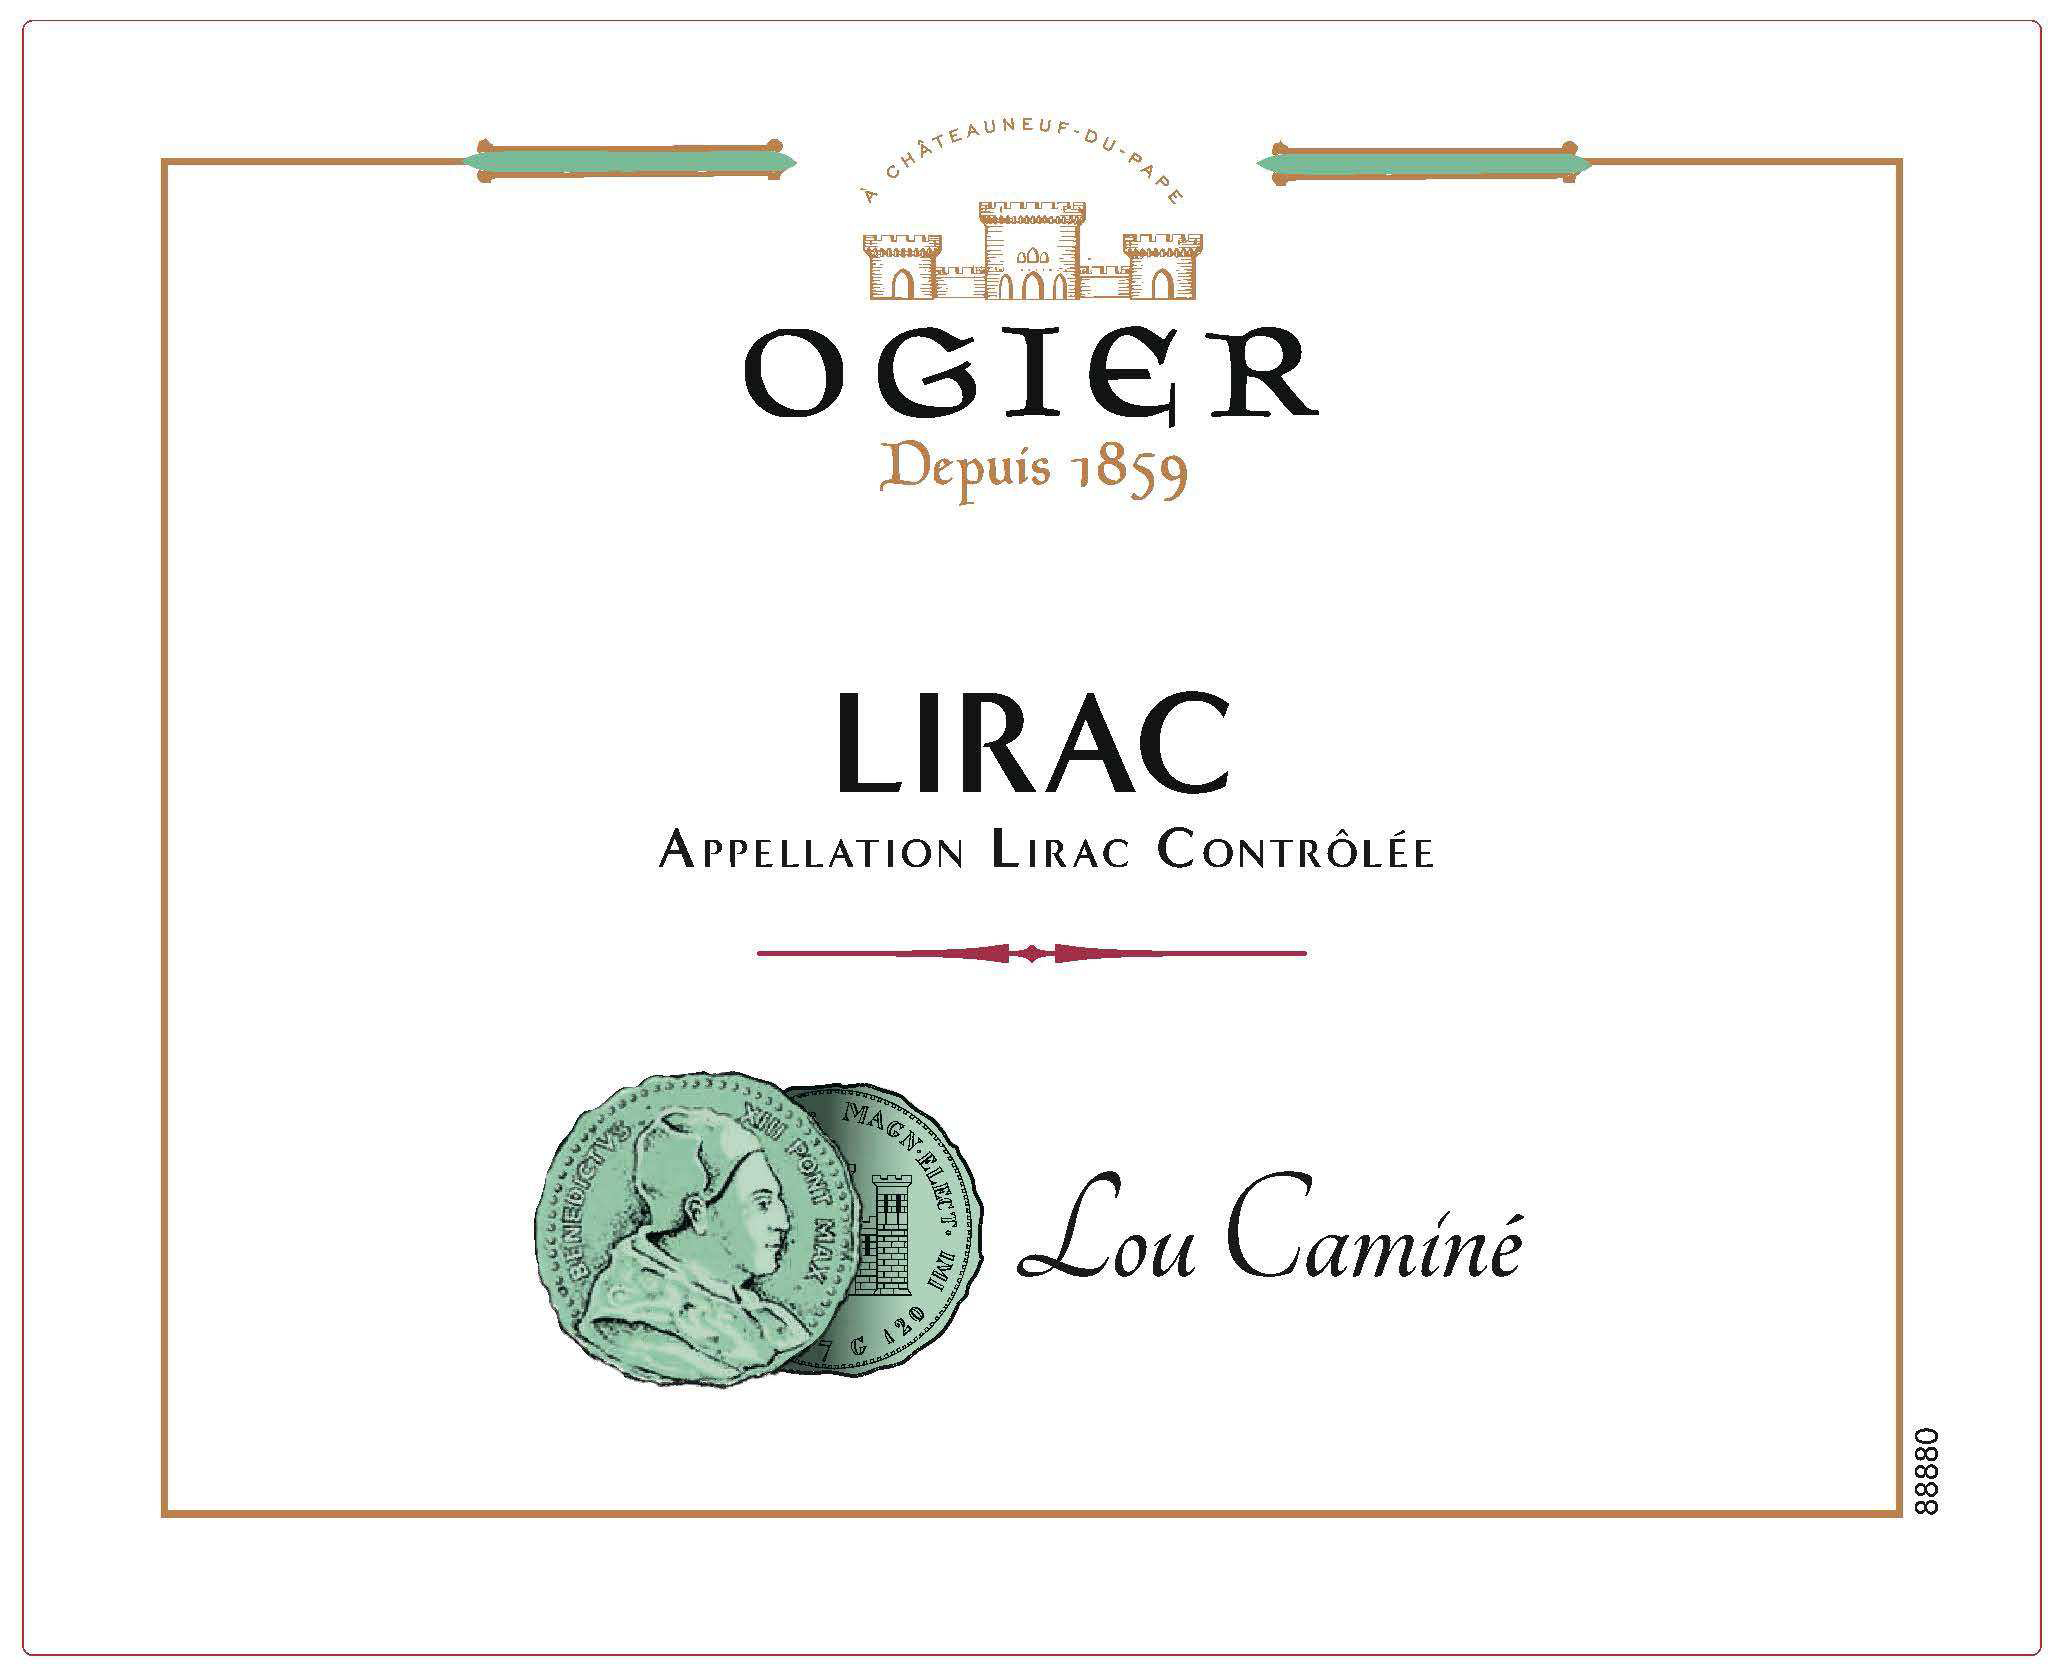 Ogier - Lou Camine - Lirac label